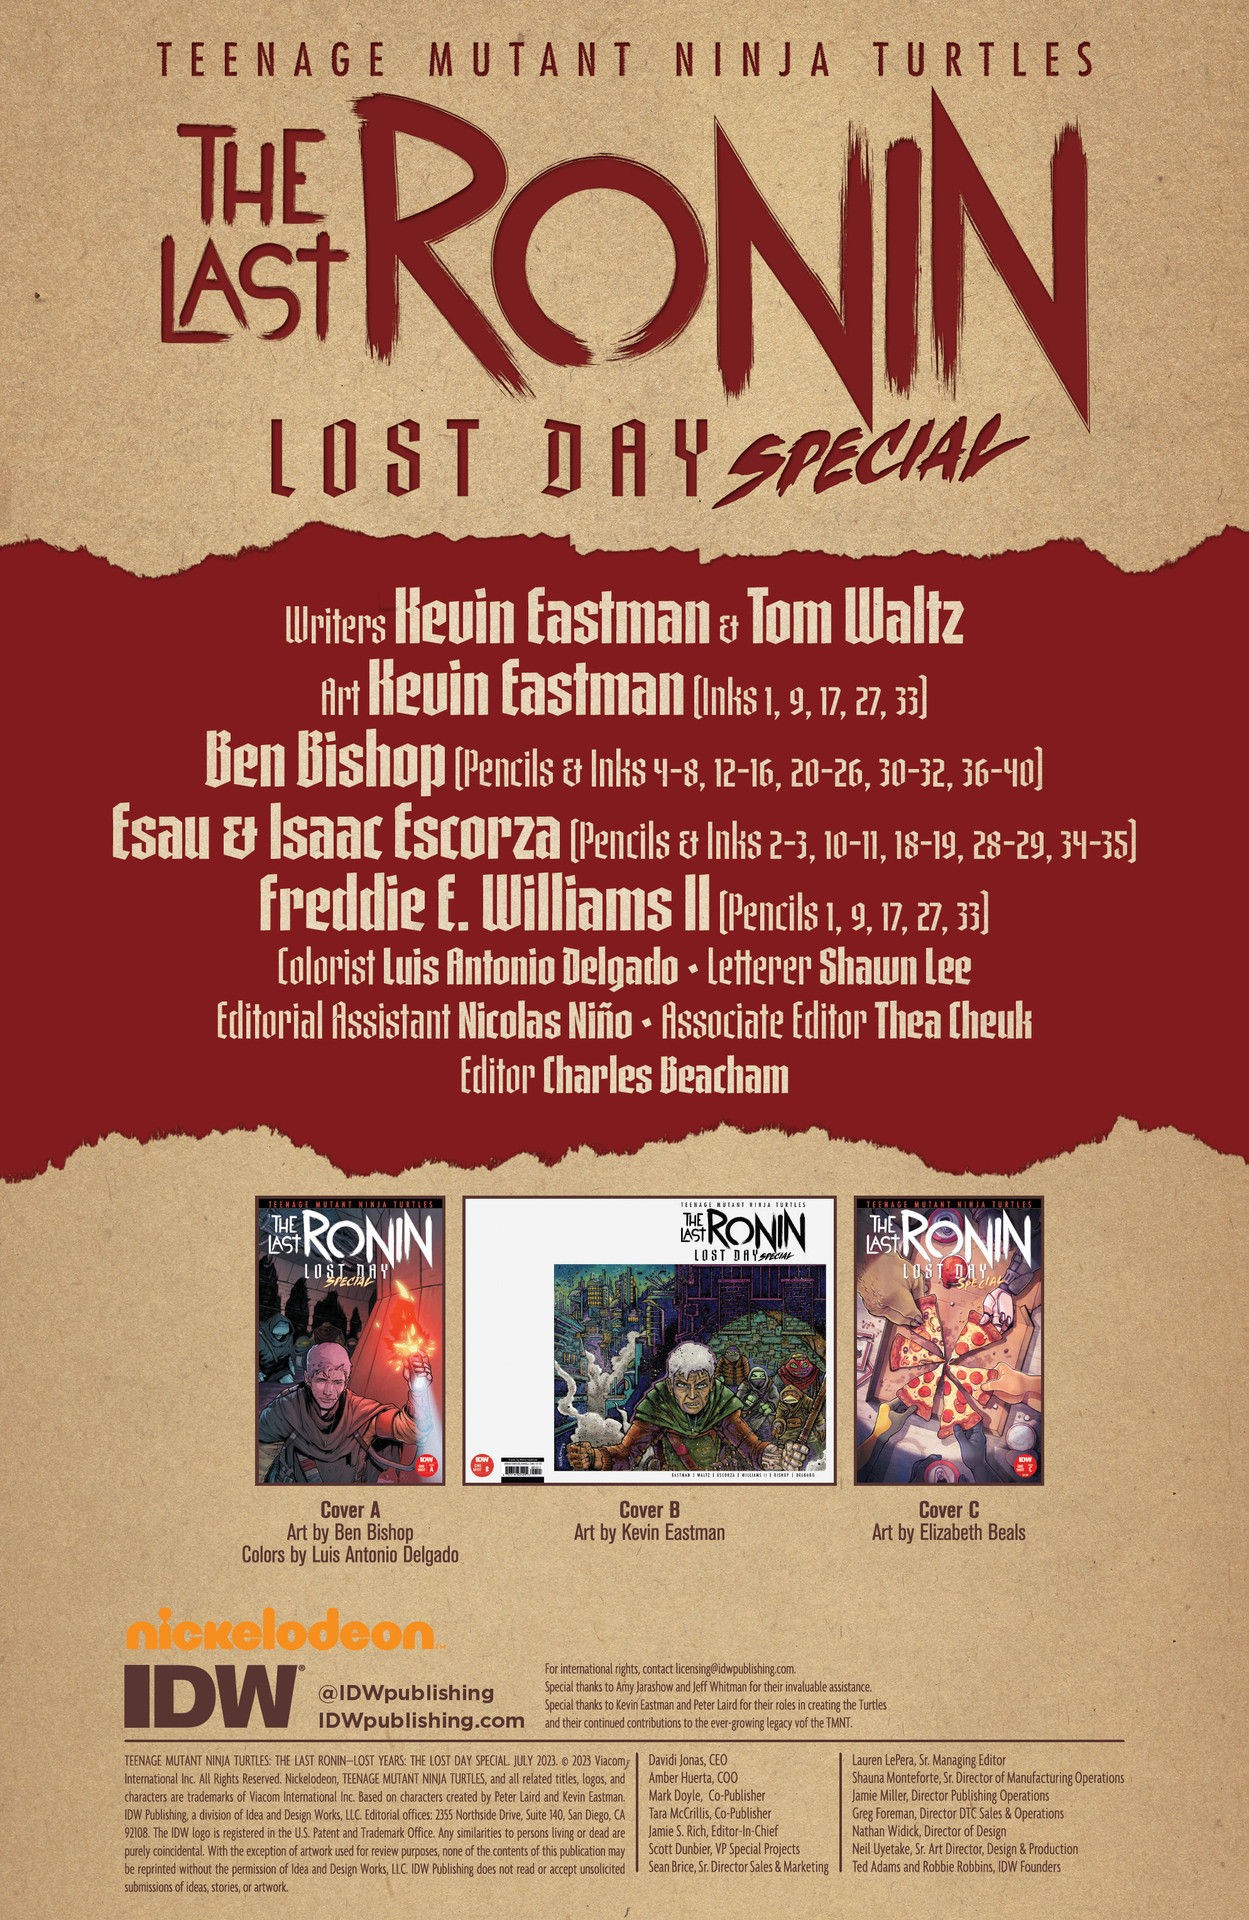 Read online Teenage Mutant Ninja Turtles: The Last Ronin - Lost Day Special comic -  Issue # Full - 2